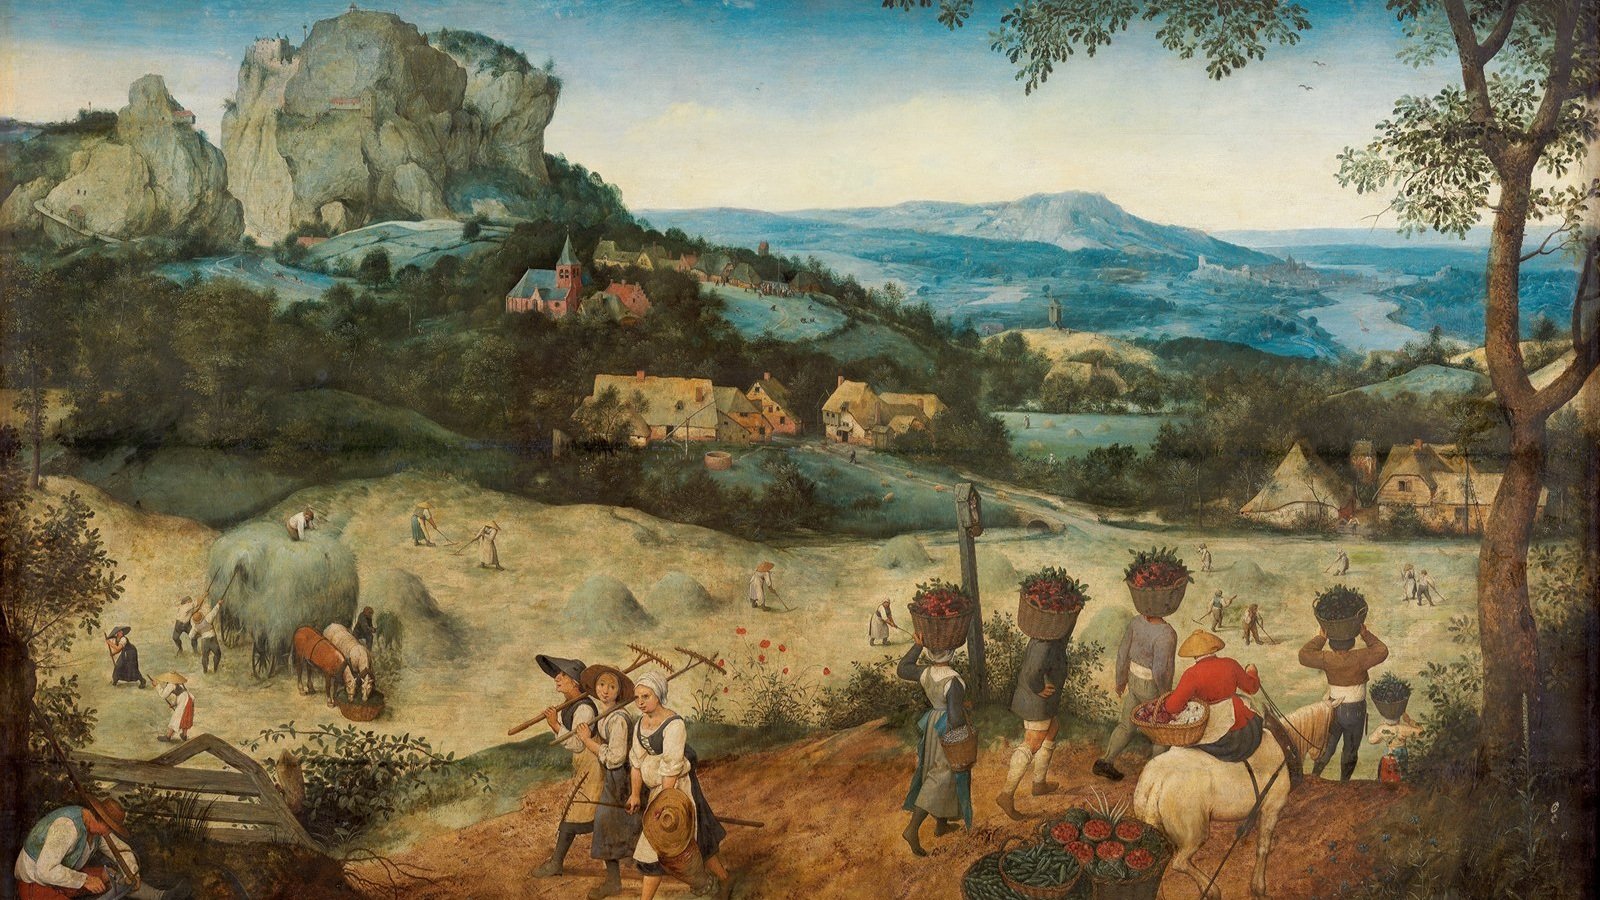 Bruegel's "Haymaking", one of the treasures of Prague's Lobkowicz Gallery